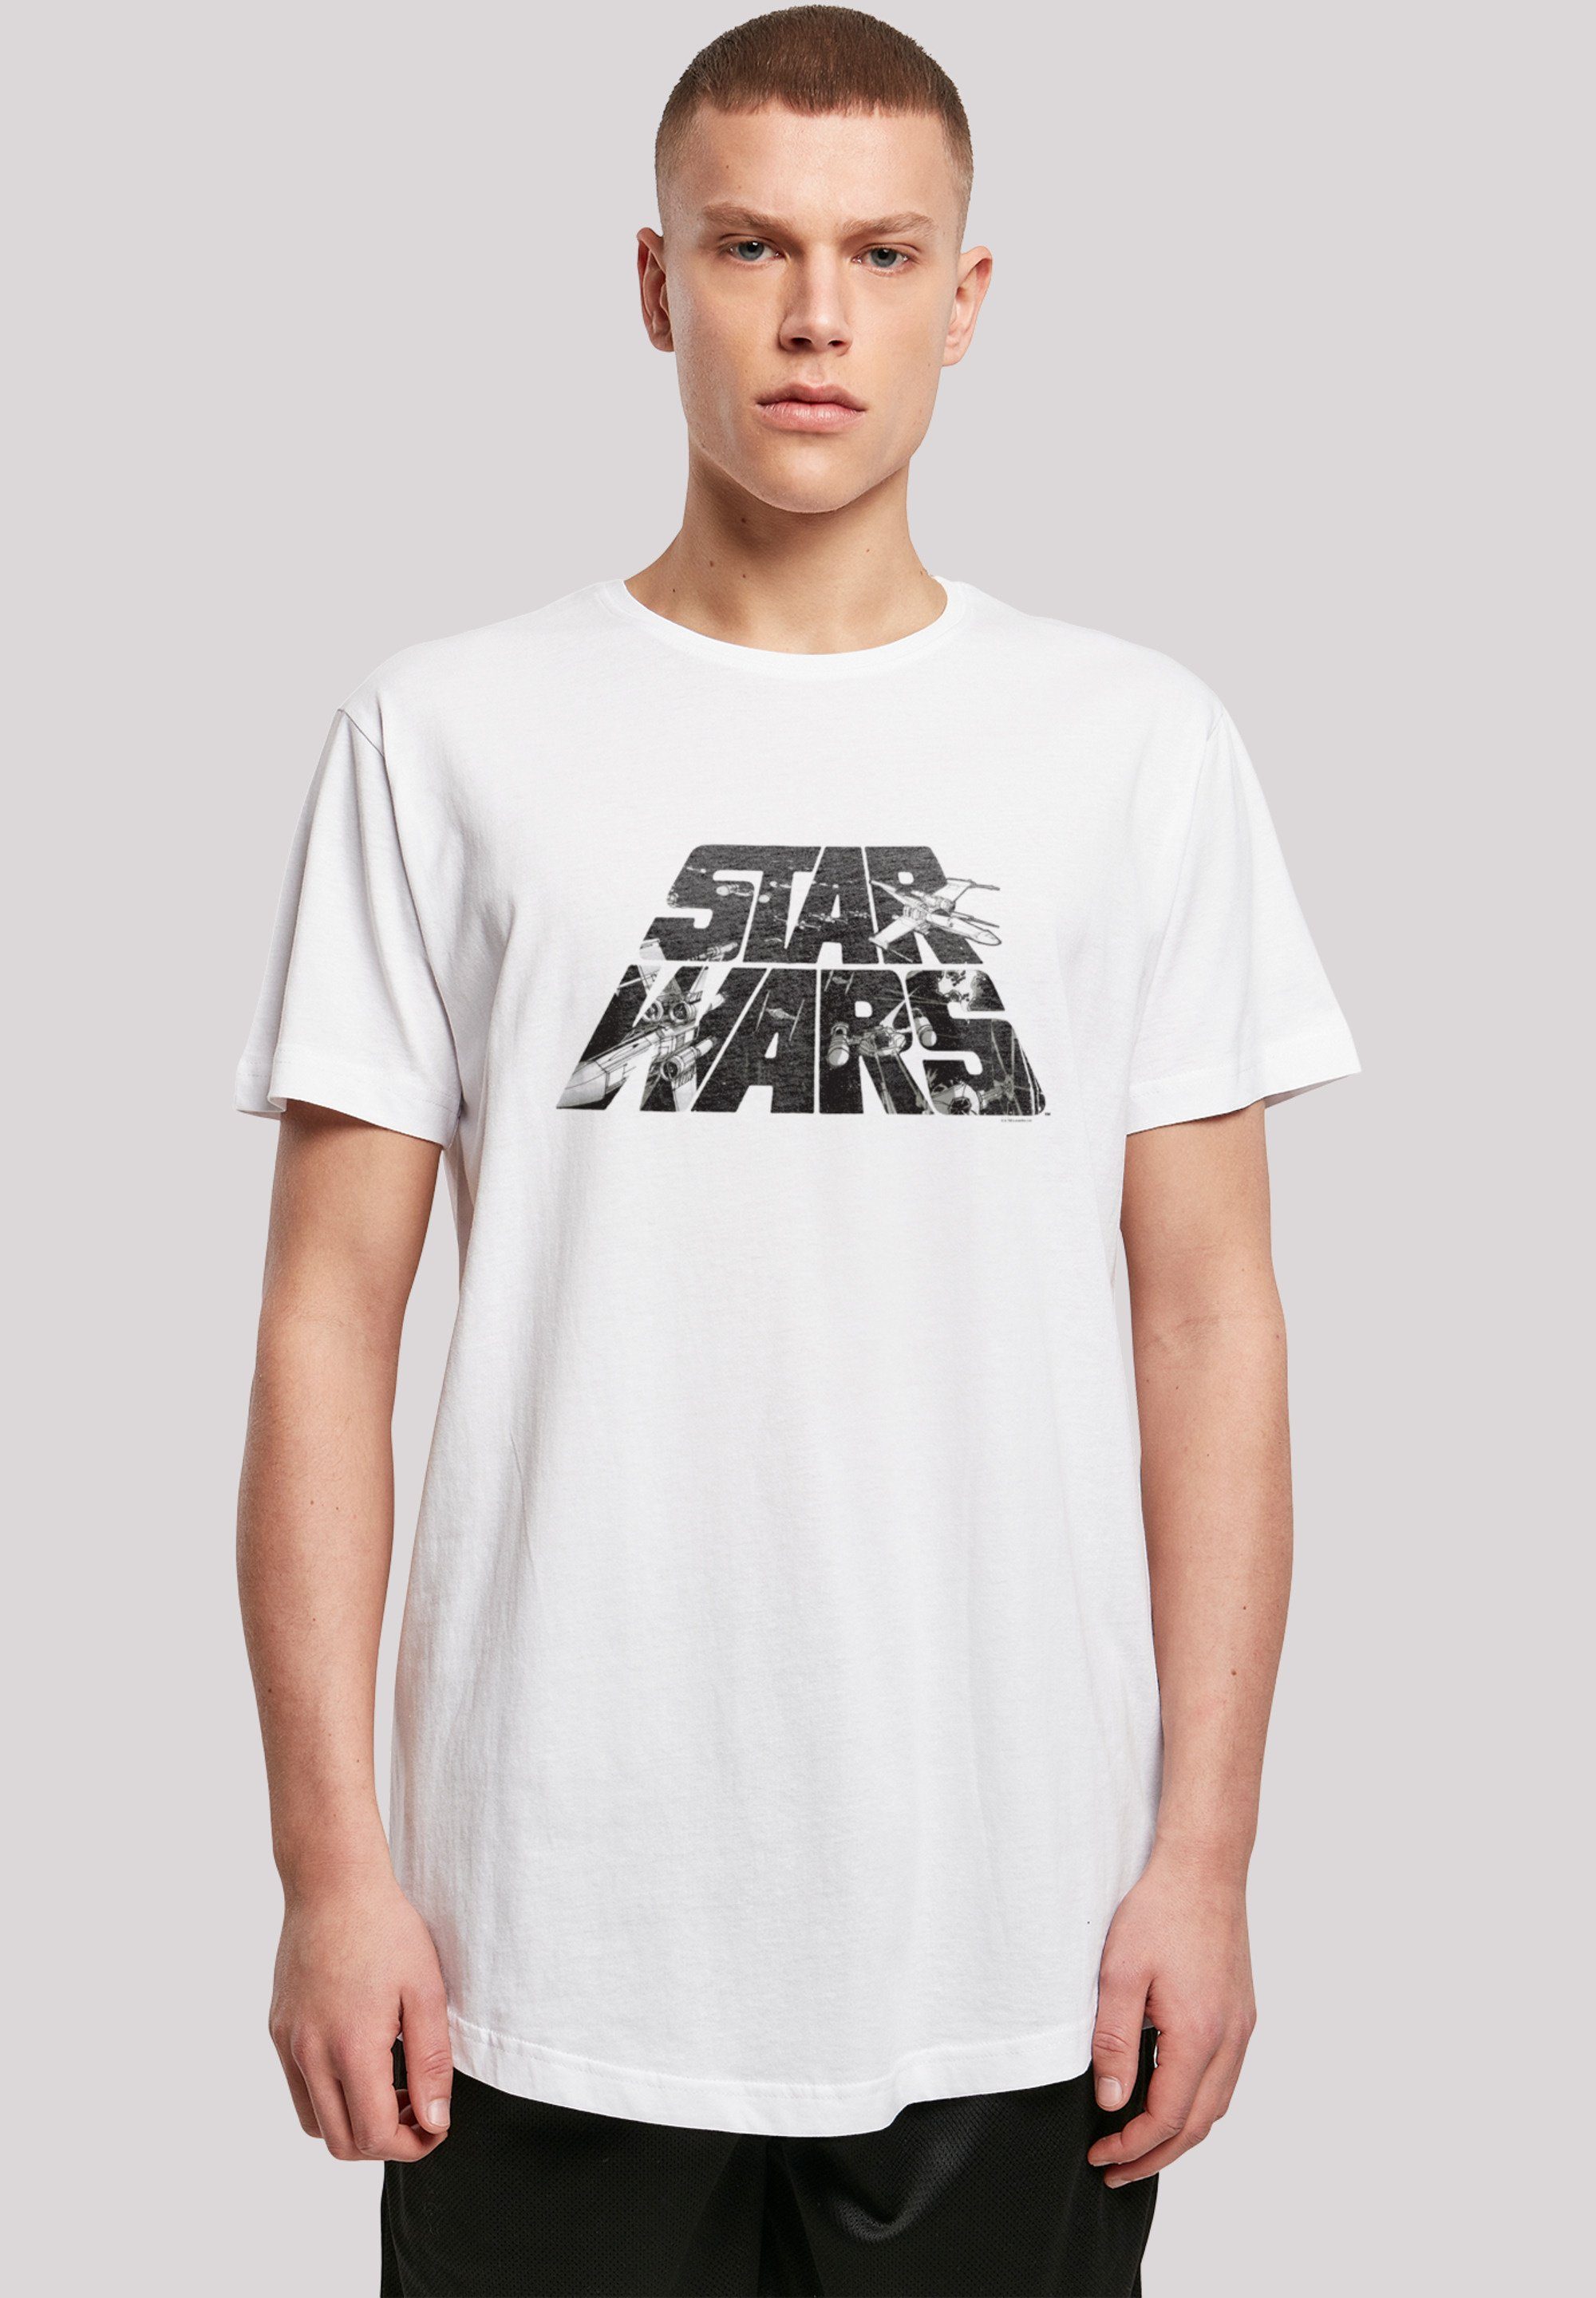 Star T-Shirt Wars F4NT4STIC Sketch Print Space Logo